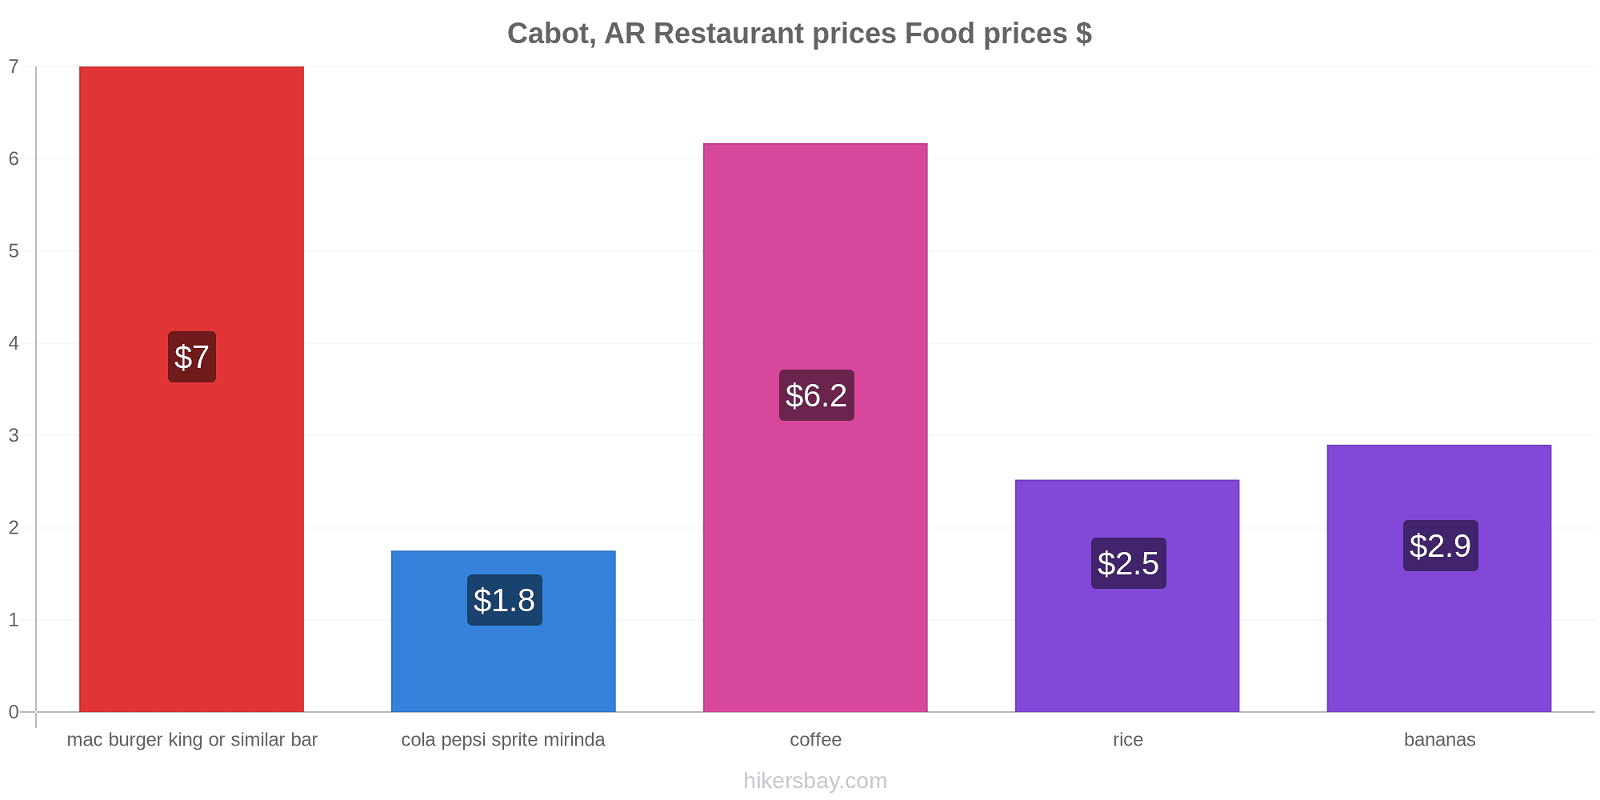 Cabot, AR price changes hikersbay.com